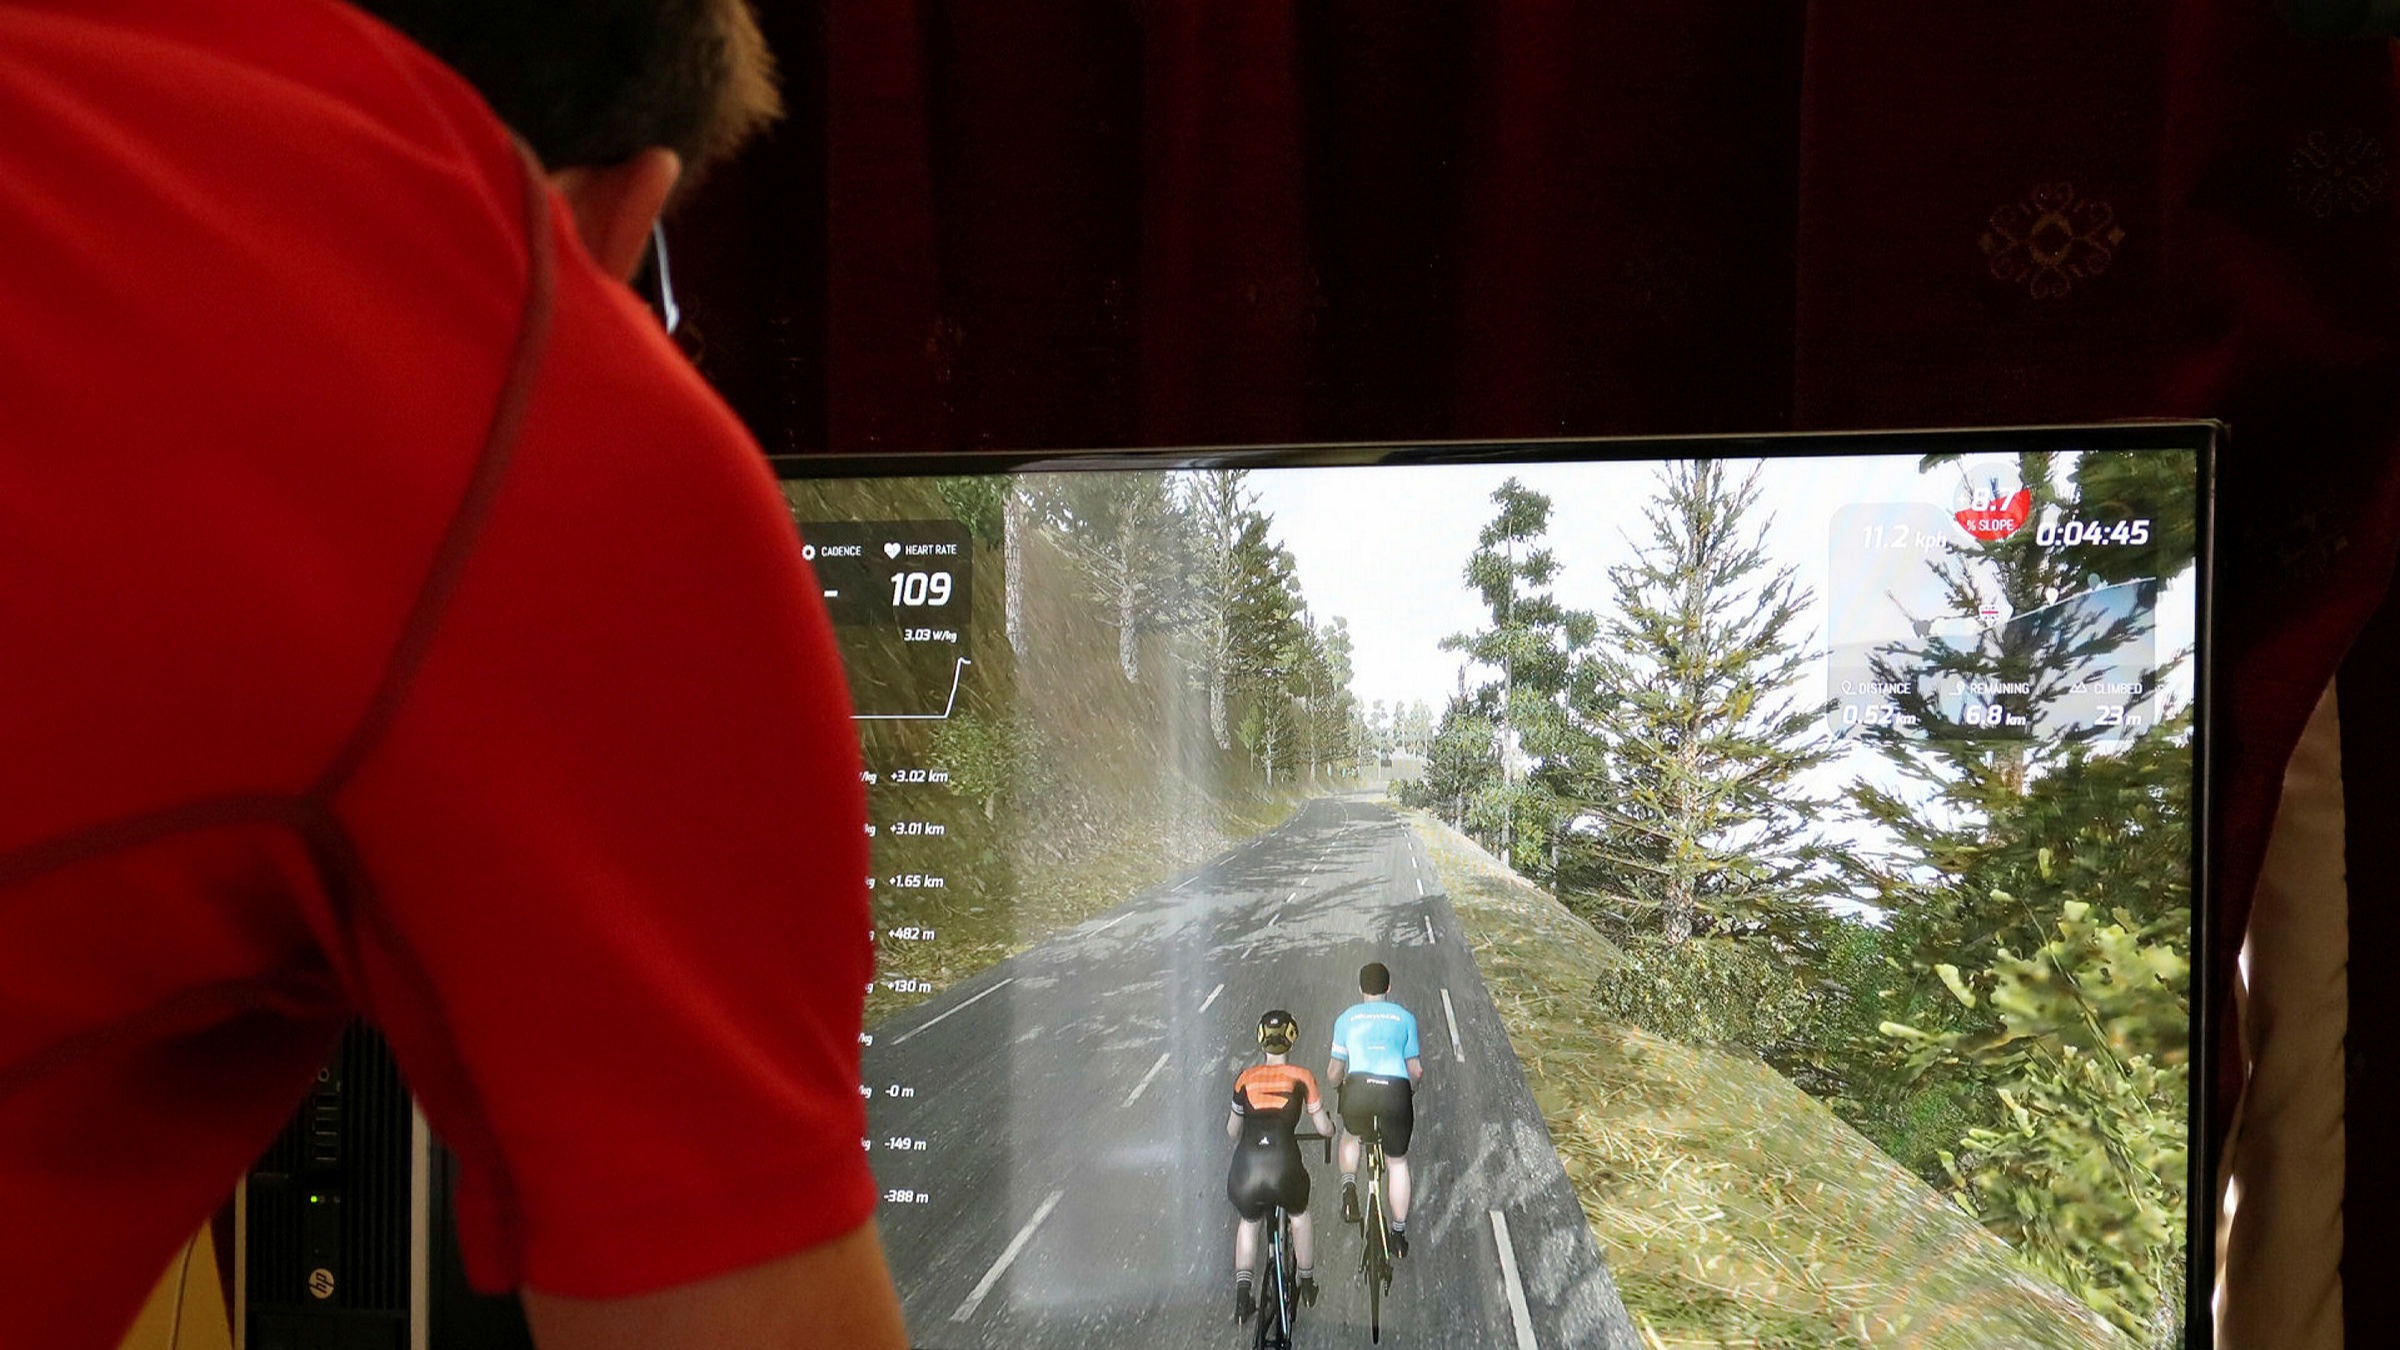 best virtual bike trainer